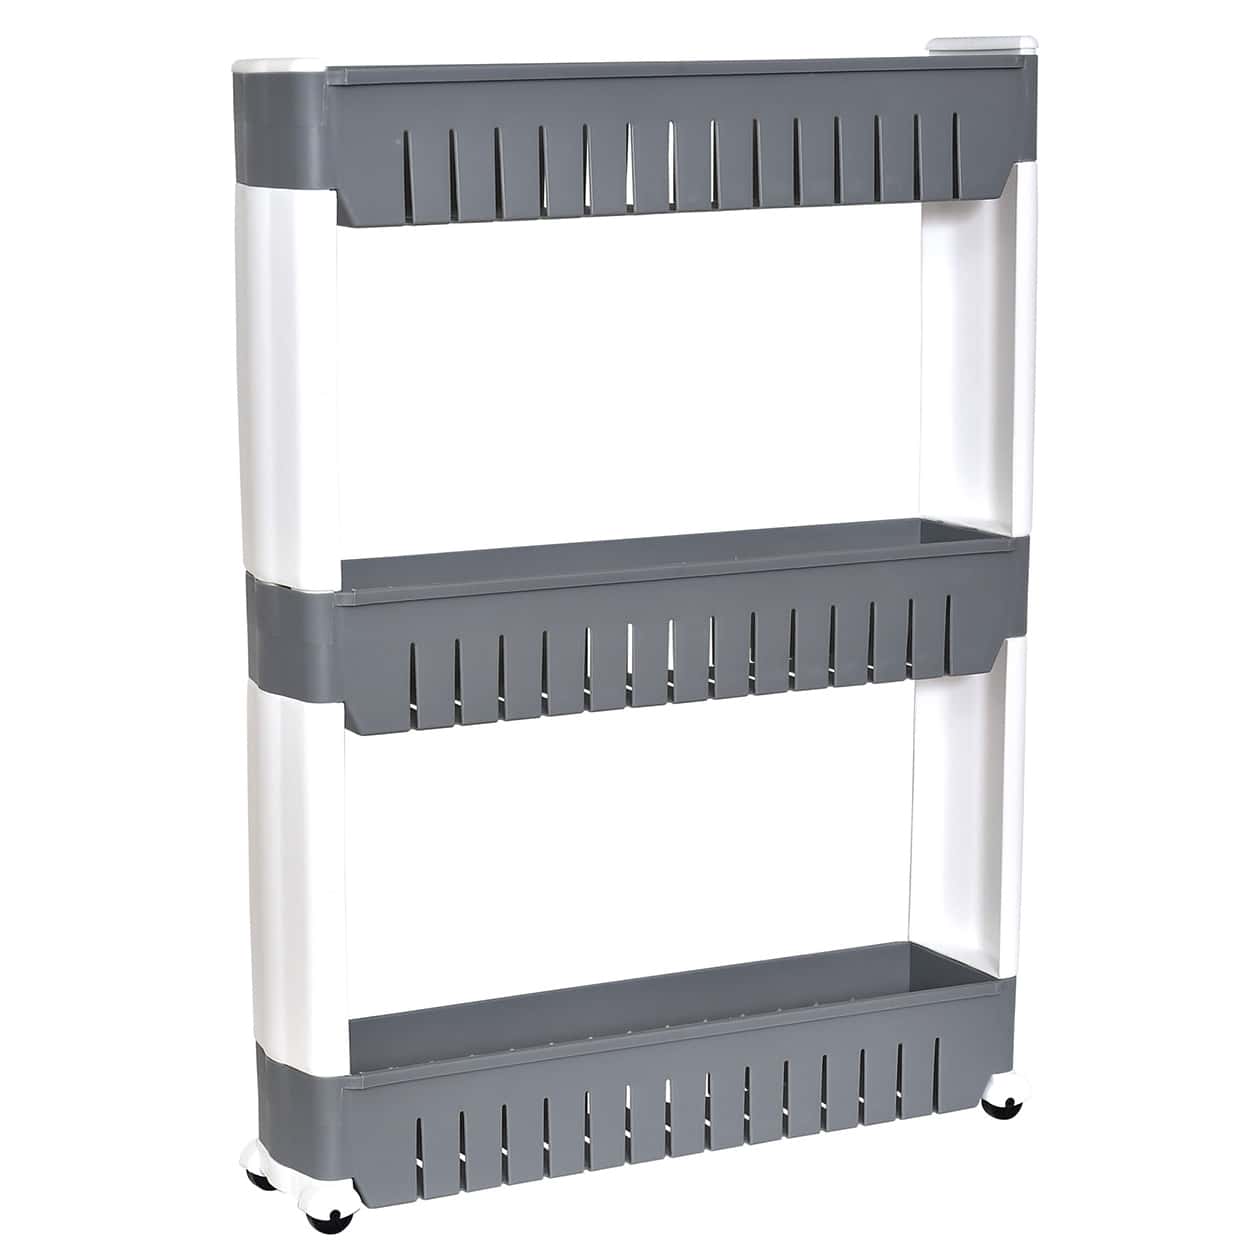 3-Tier Slim Rolling Utility Cart Multi-Purpose Organizer White Gray – Kitchen, Bathroom, Office Storage - Easy to Assemble, Durable